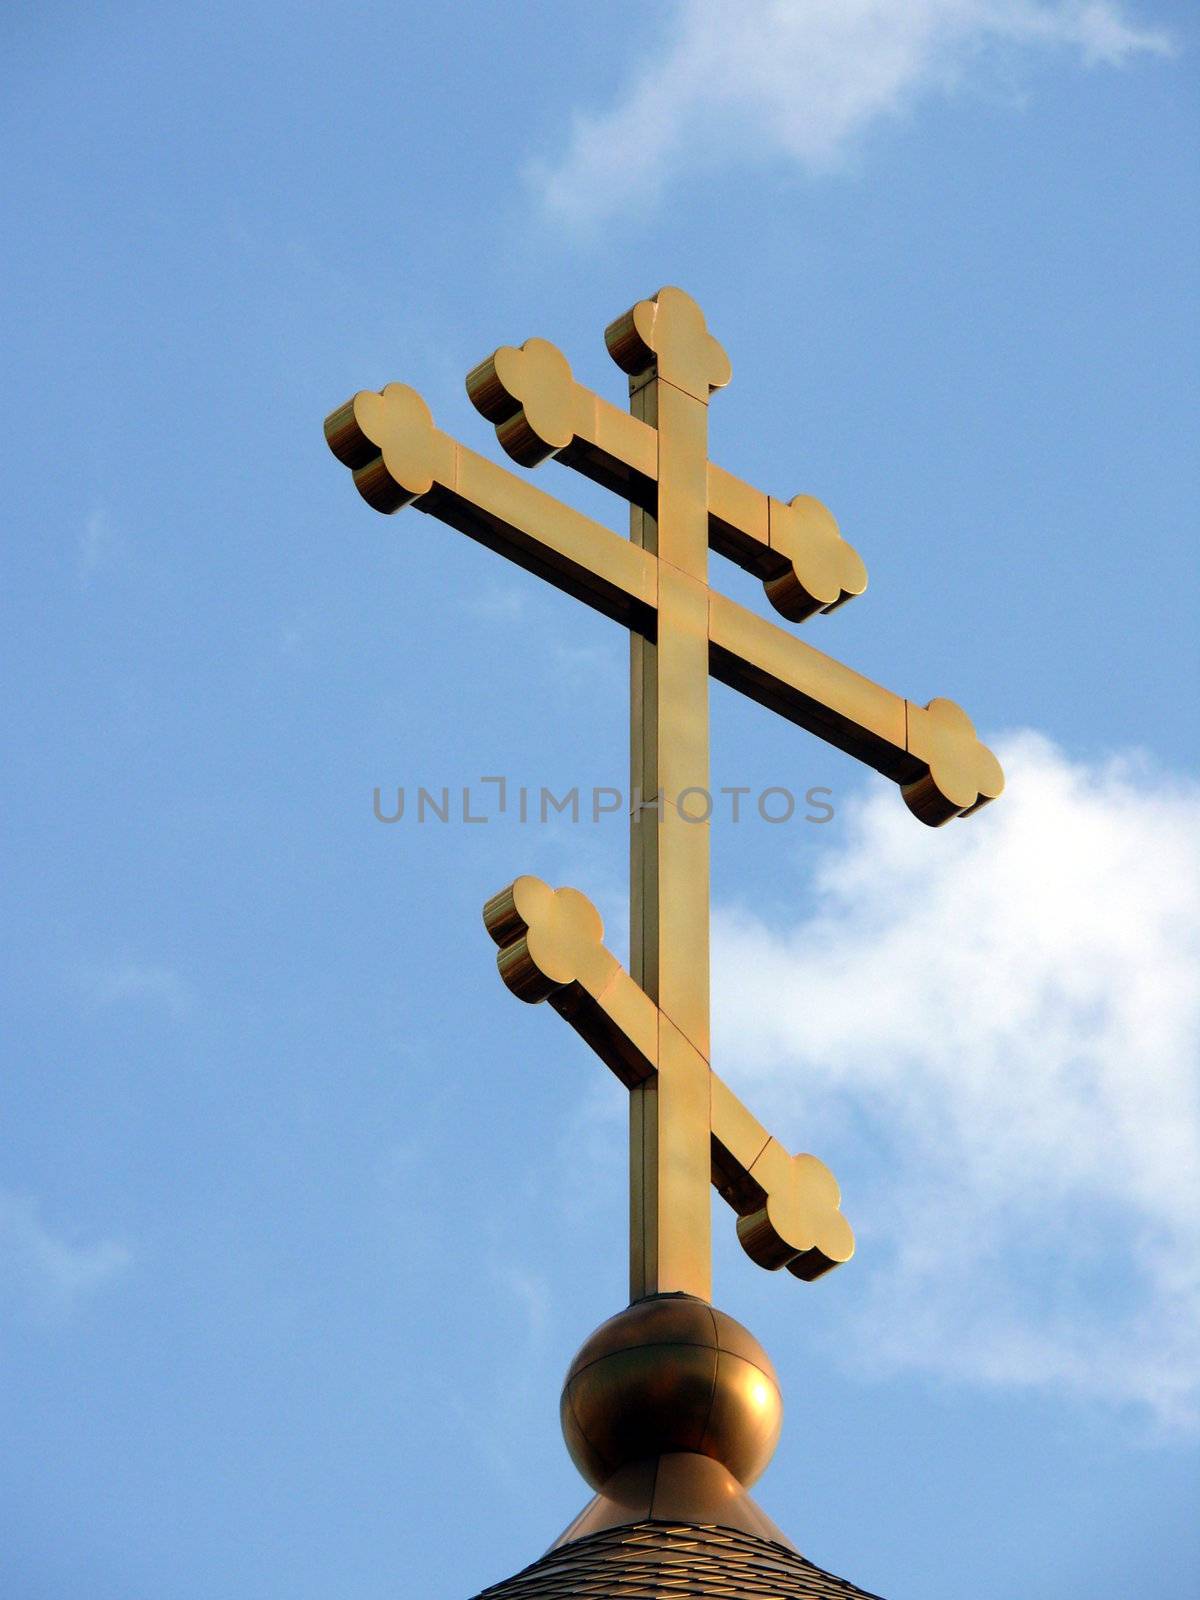 Ortodoxal cross in the blue sky background by Stoyanov